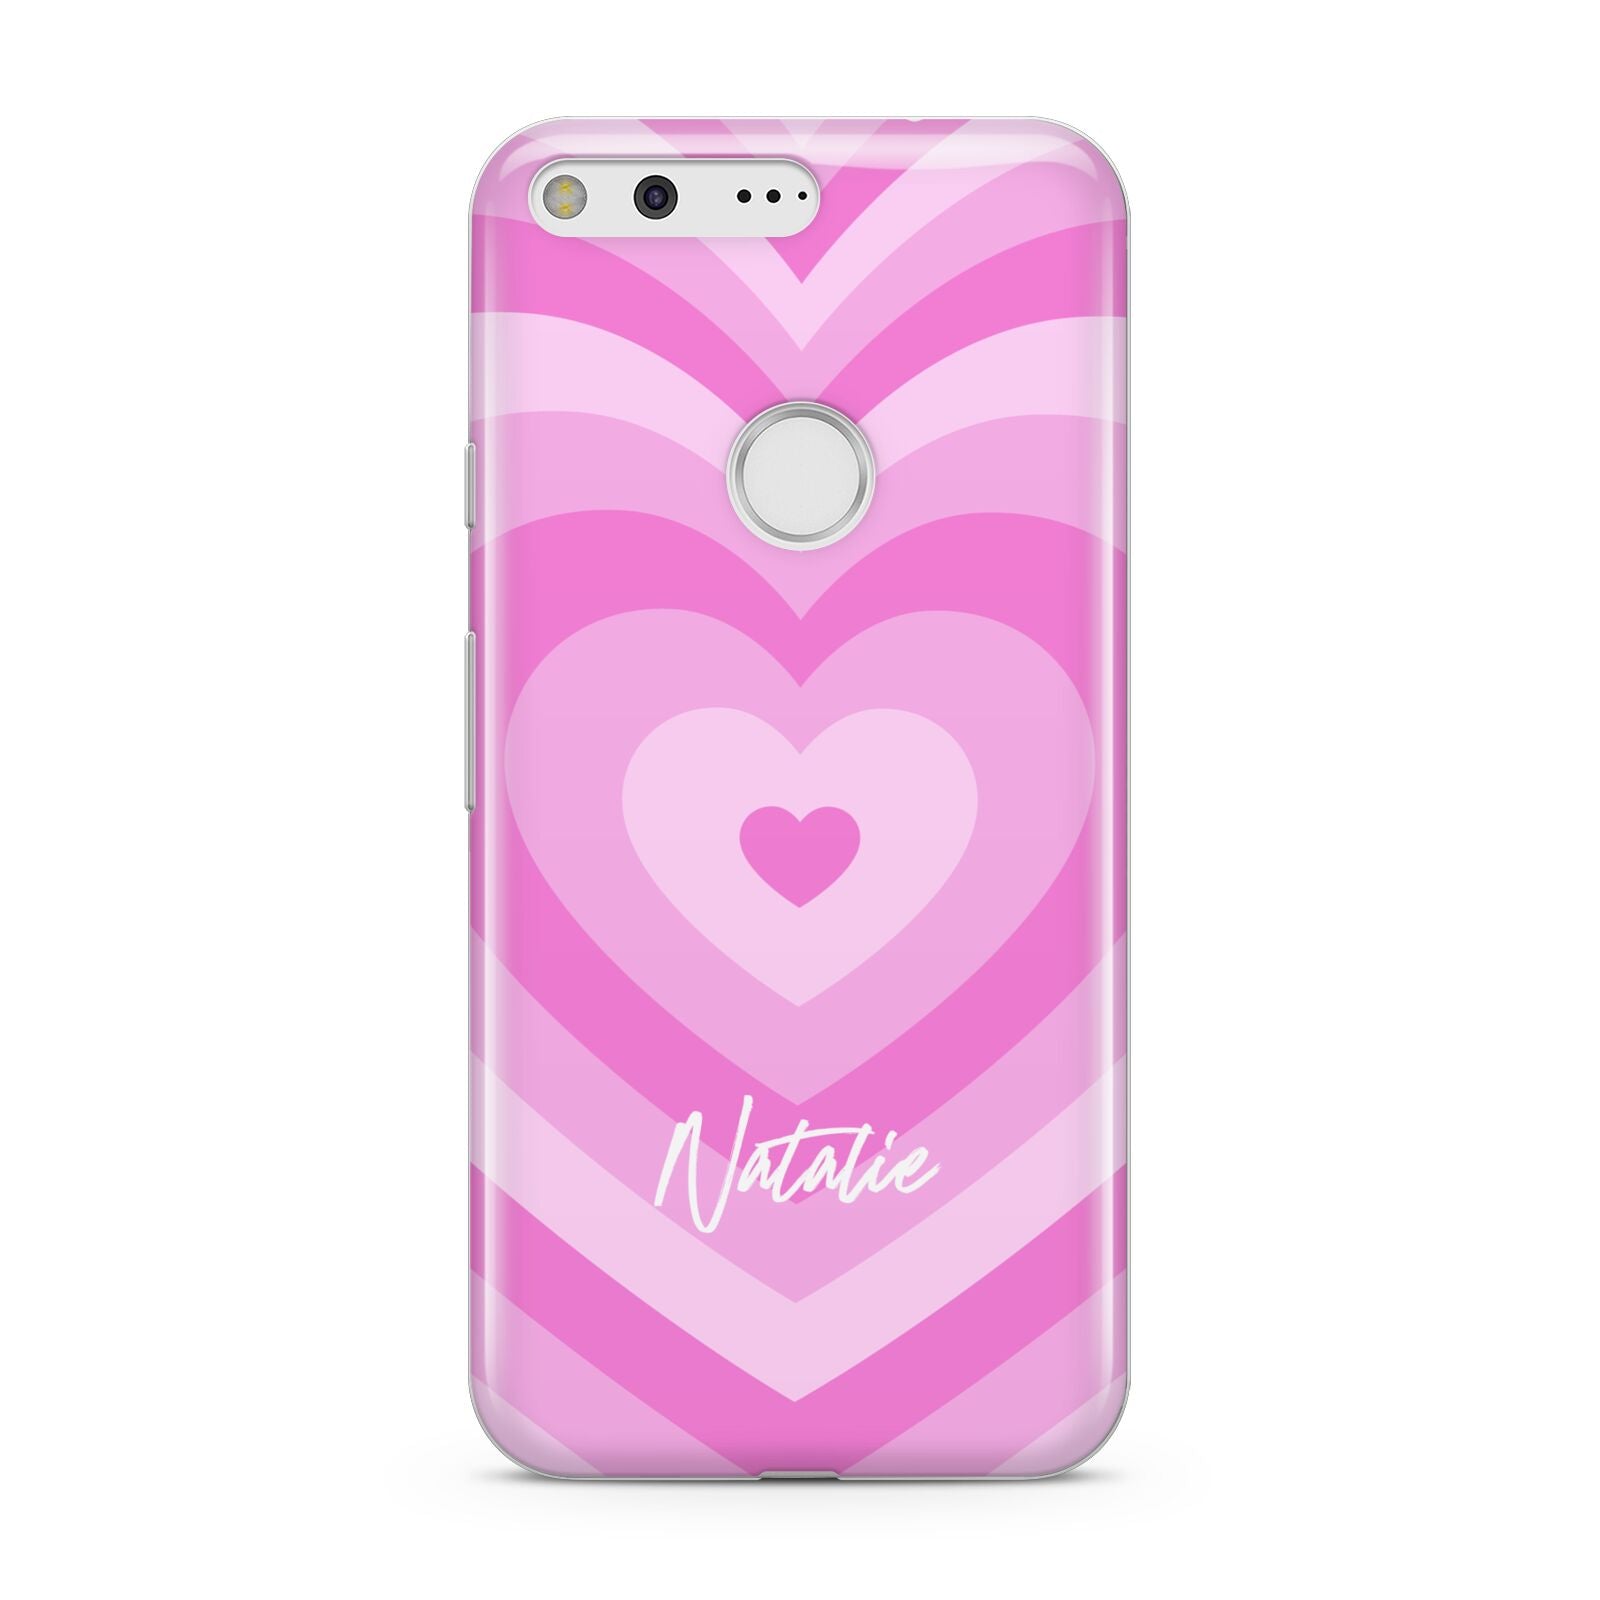 Personalised Pink Heart Google Pixel Case